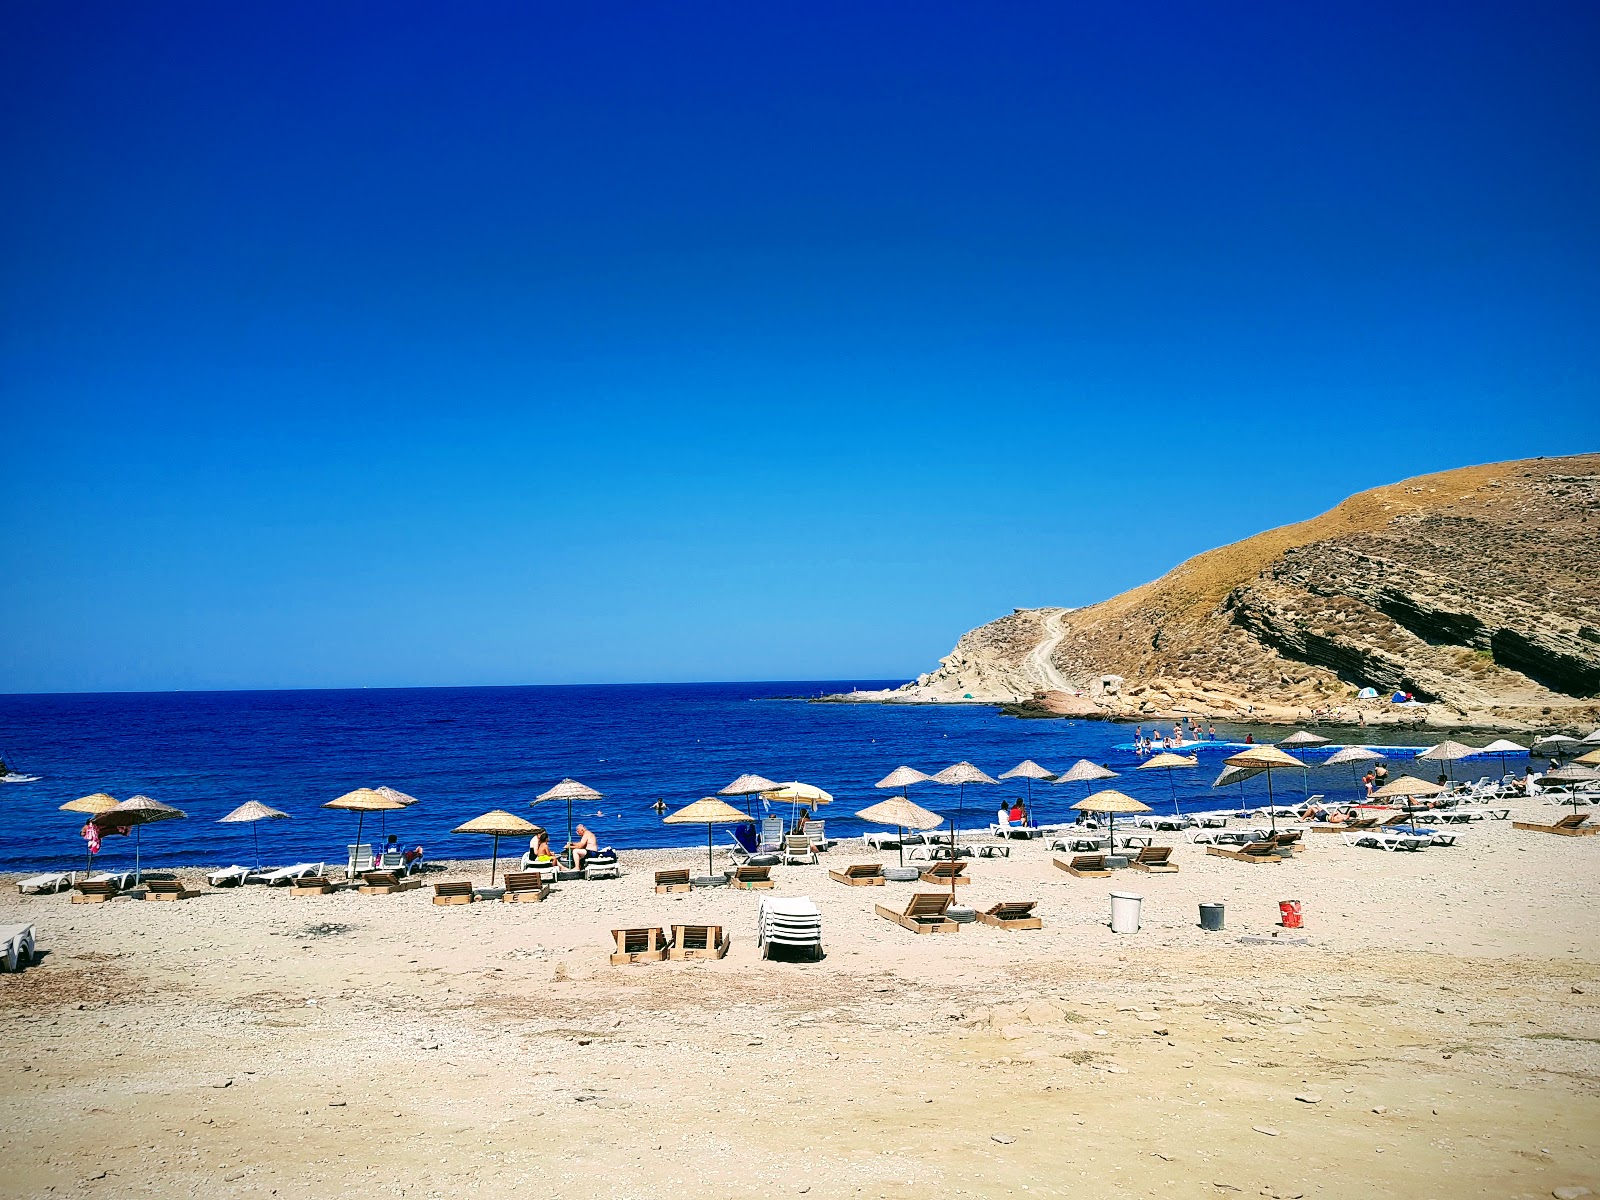 Fotografija Yildiz Koyu beach z lahki kamenček površino